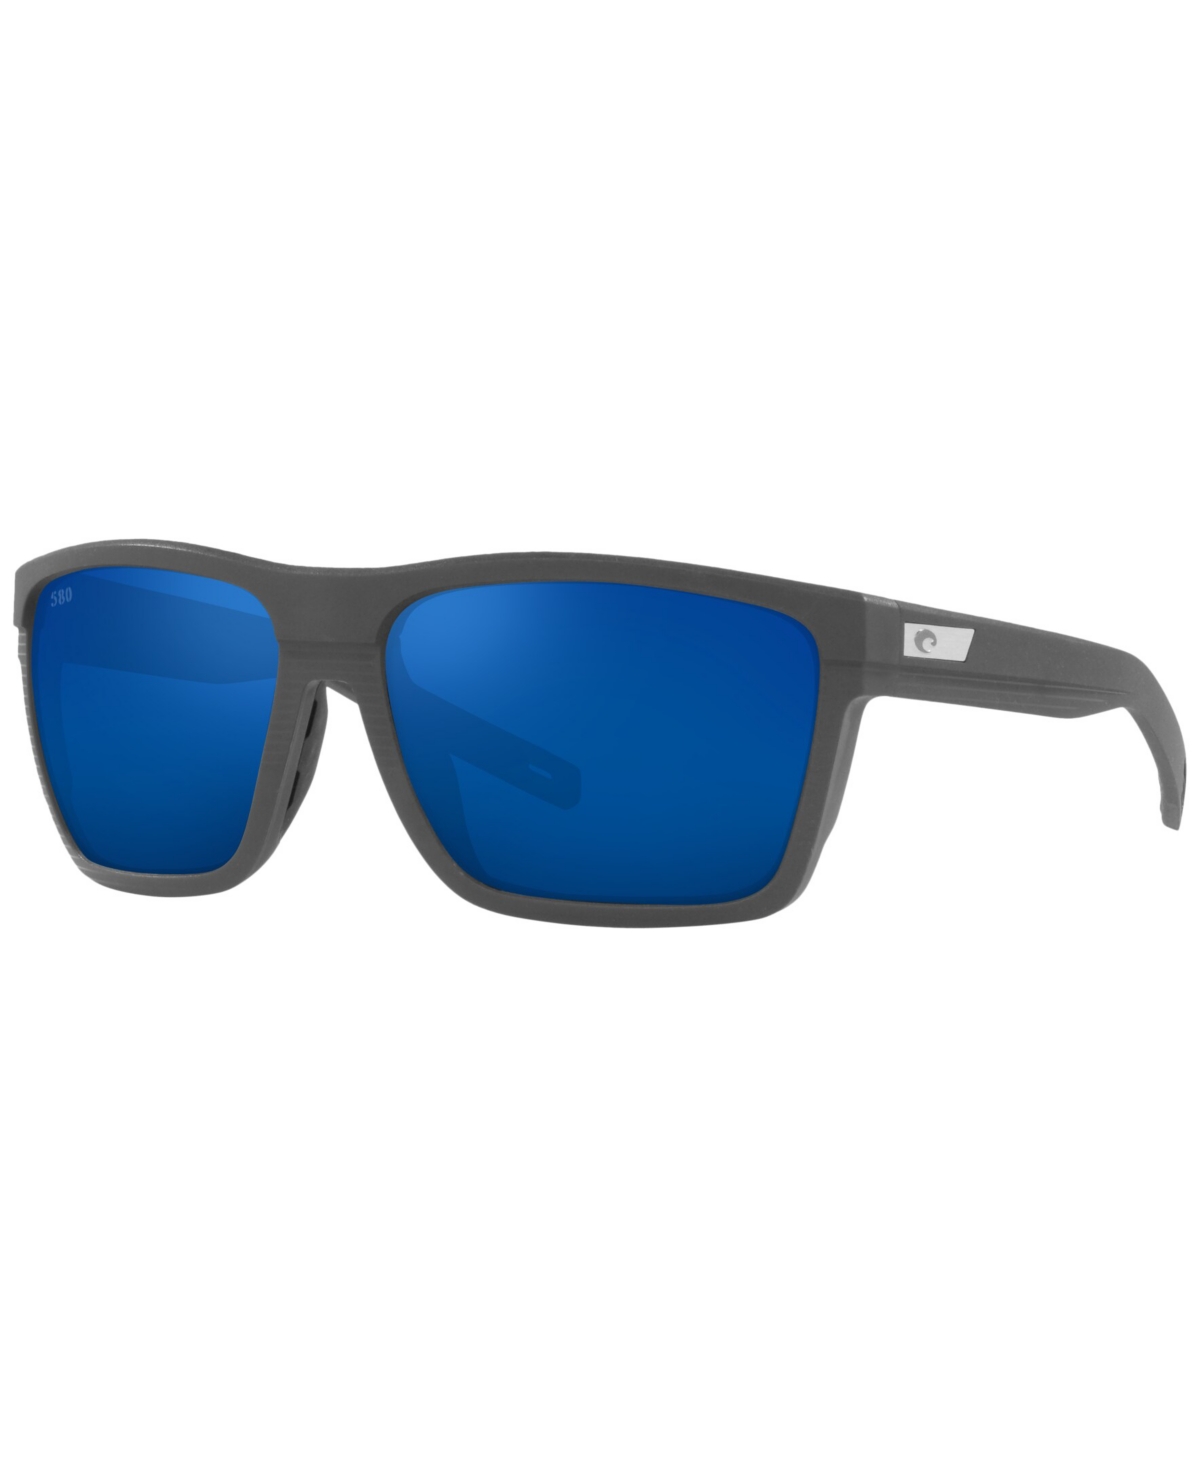 Men's Polarized Sunglasses, Pargo 61 - Gray